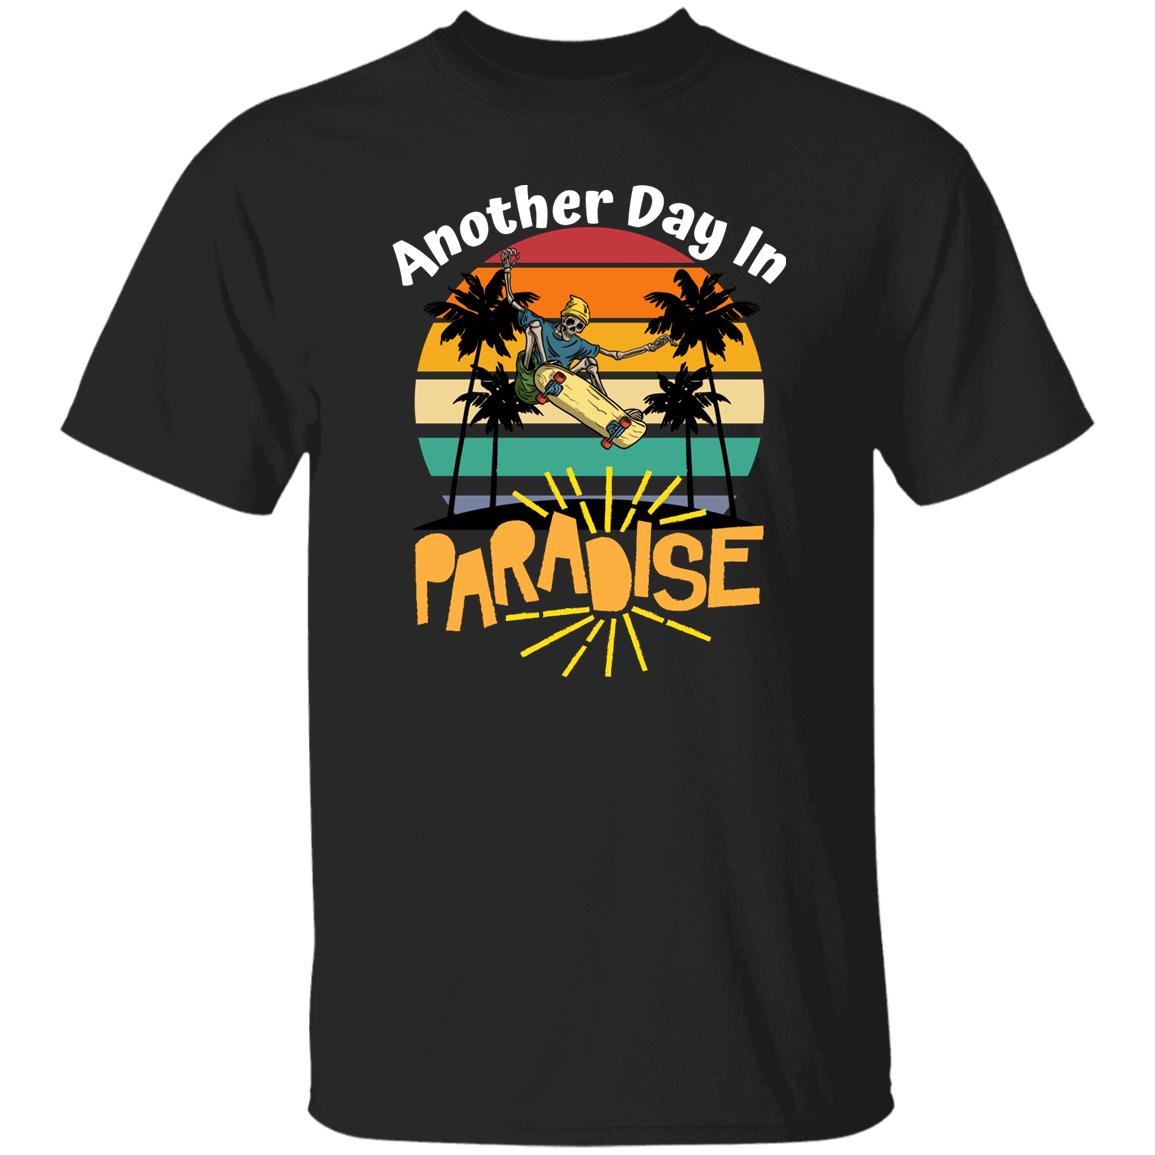 Another Day in Paradise Skater Surfer Beach Punk Rock T-shirt Beach Lover Music Lover shirt